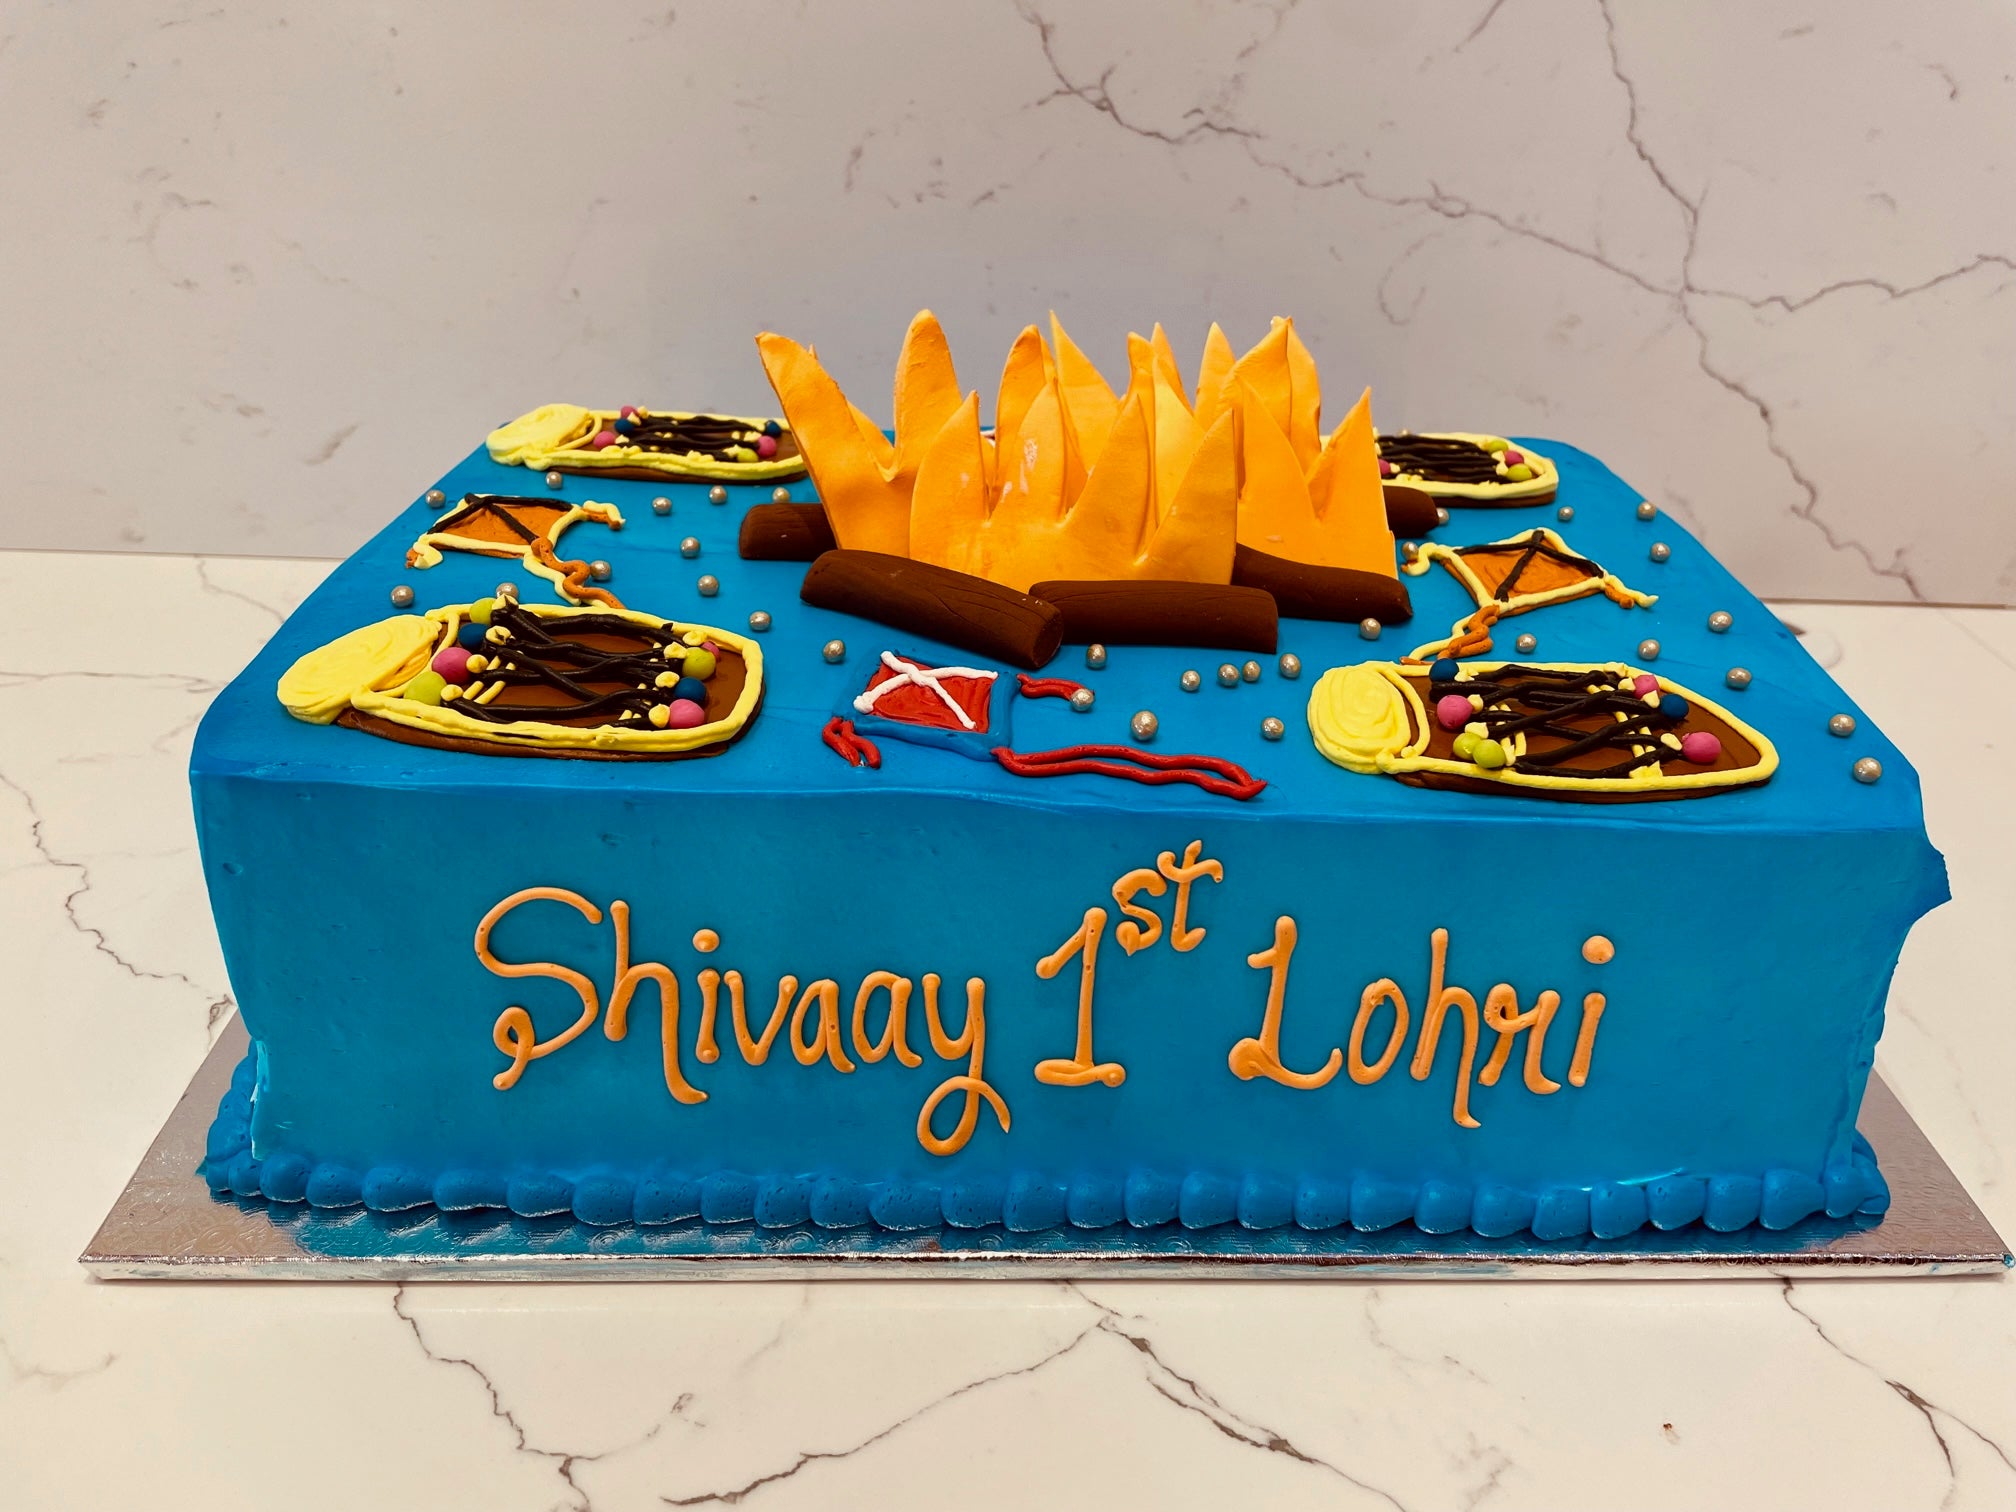 Prince Lohri Birthday Cake - Rashmi's Bakery